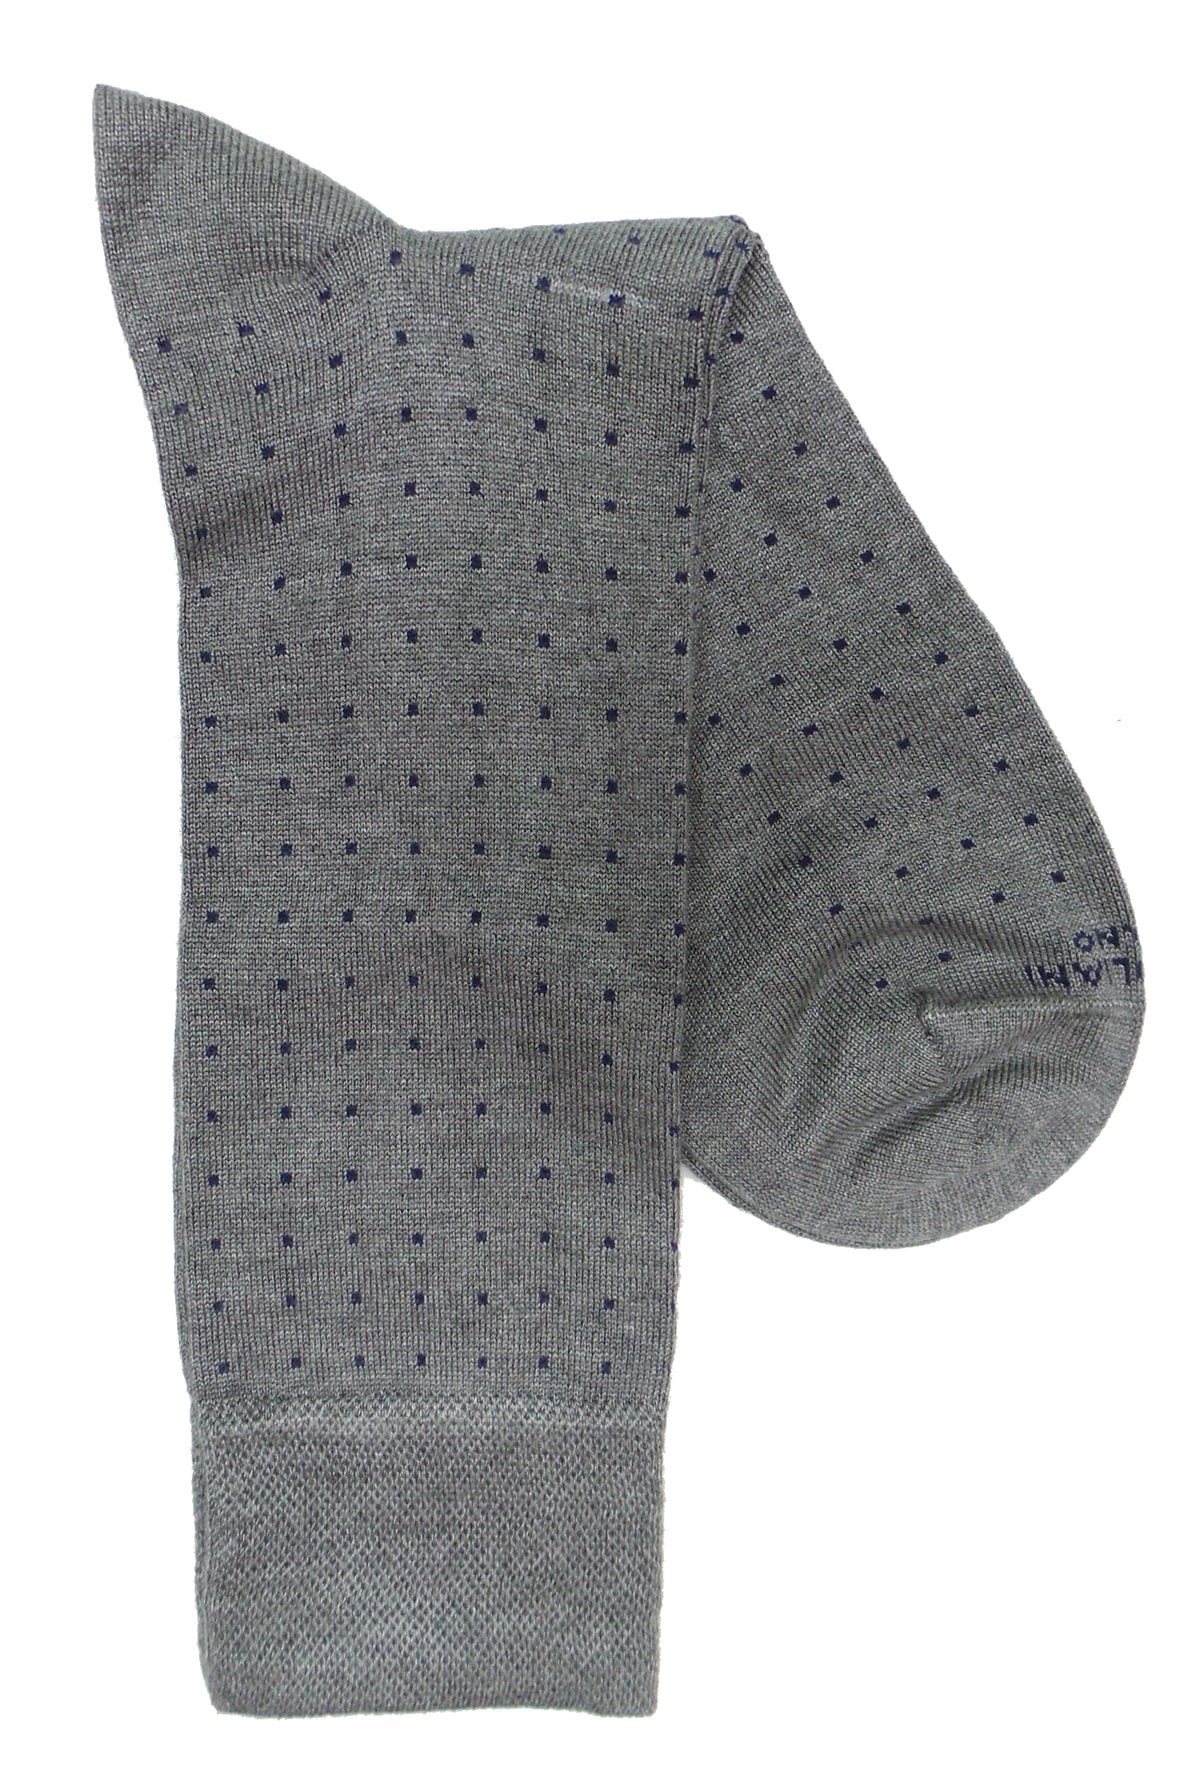 Marcoliani 4296 Extra Soft Mousse of Modal Dot Pattern Dress Socks